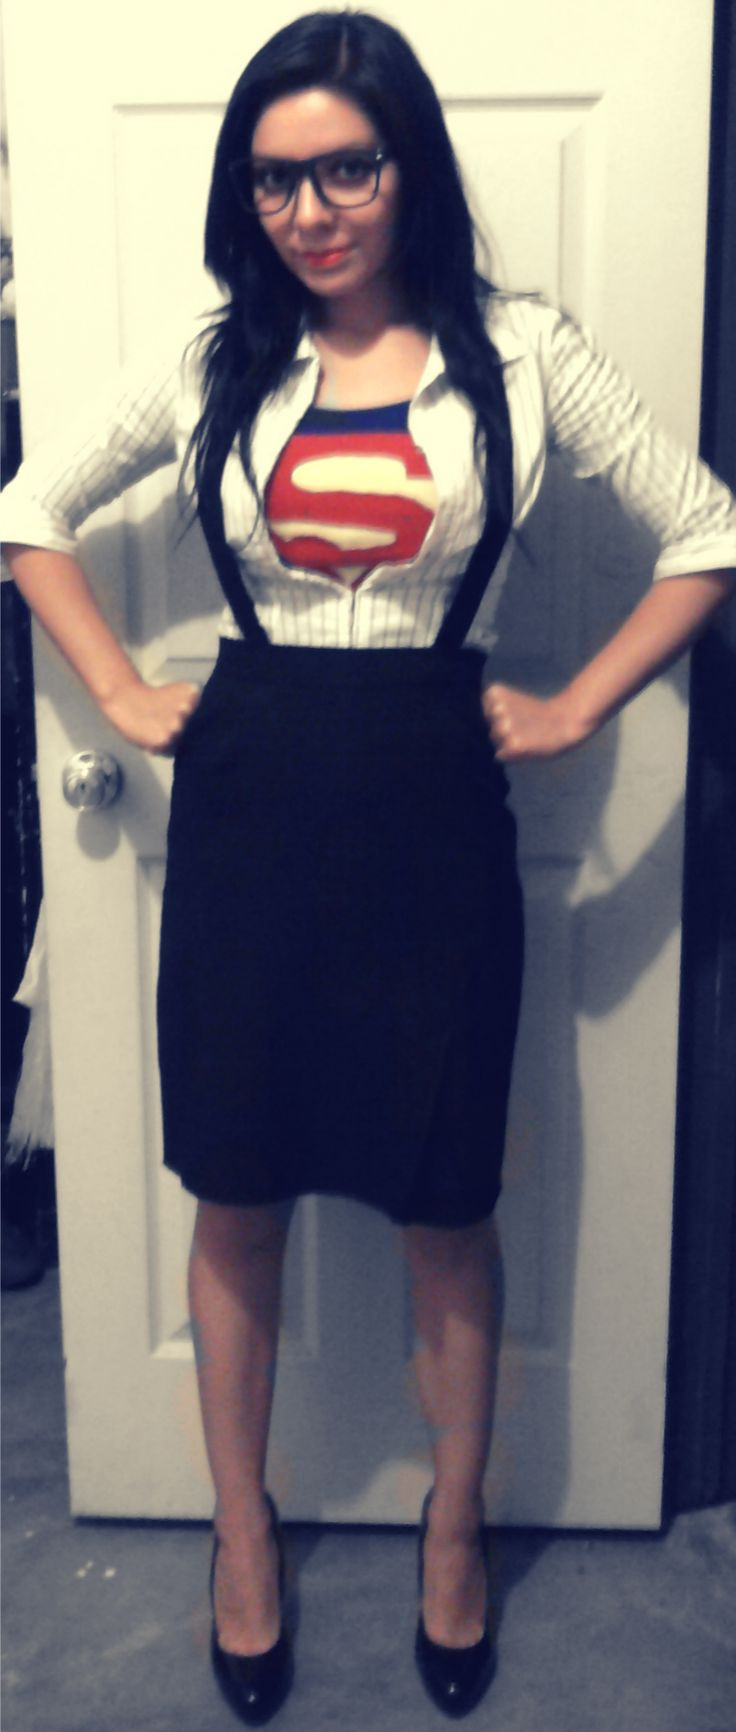 Best ideas about DIY Womens Superhero Costumes
. Save or Pin Best 20 Superhero costumes women ideas on Pinterest Now.